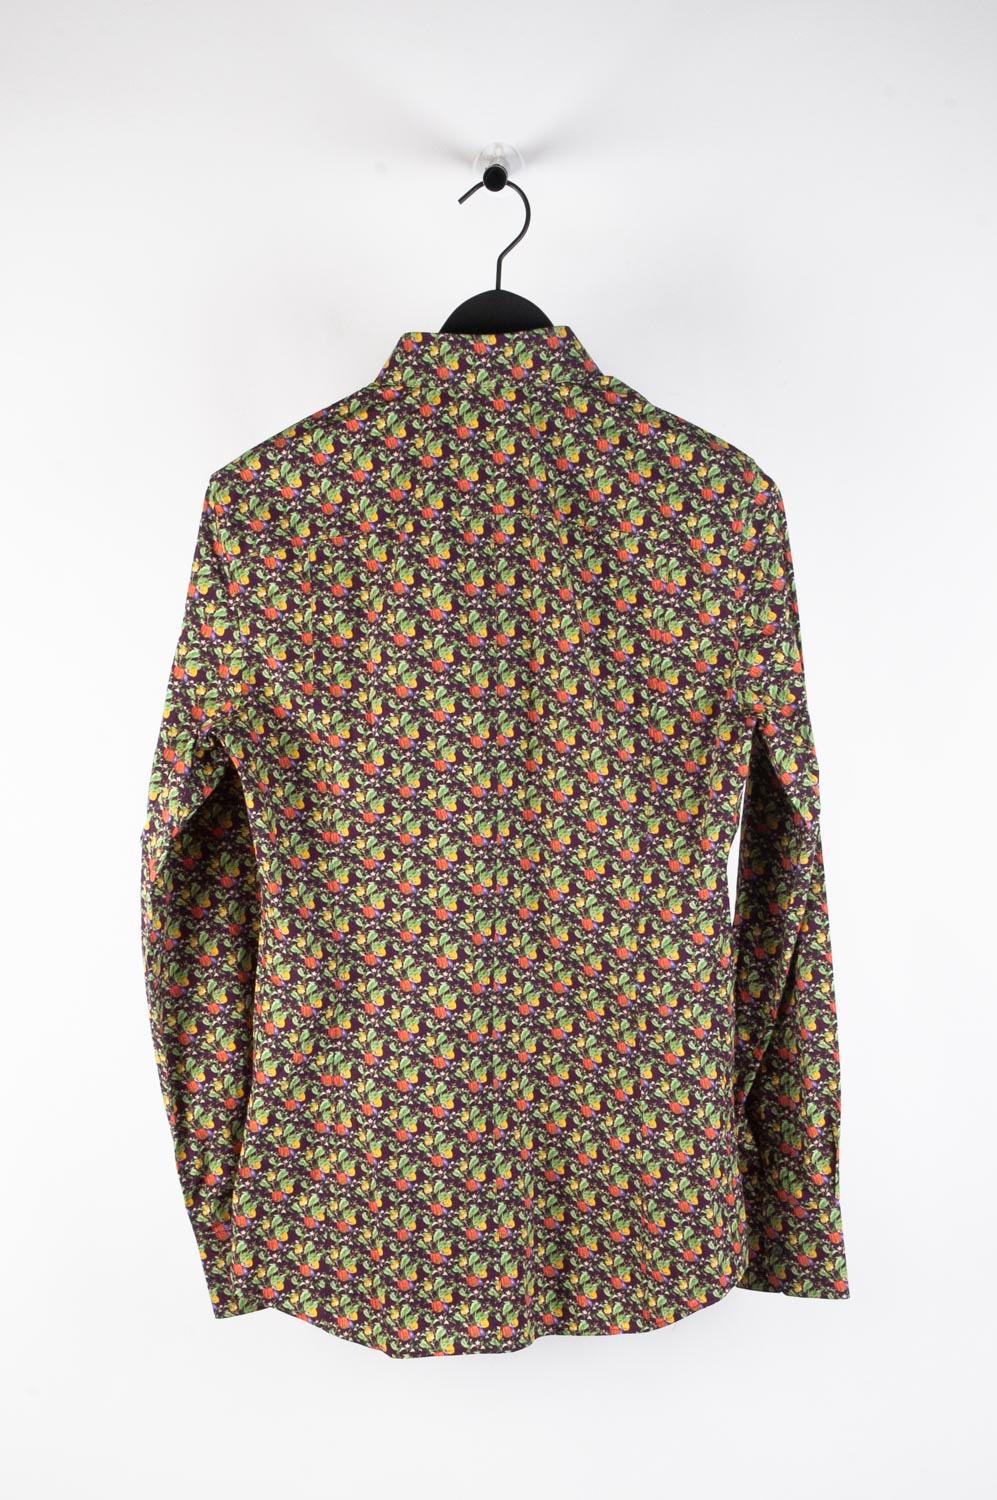 Dolce&Gabbana Men Shirt Casual Size 40/15.75 (S/M), S437 For Sale 1